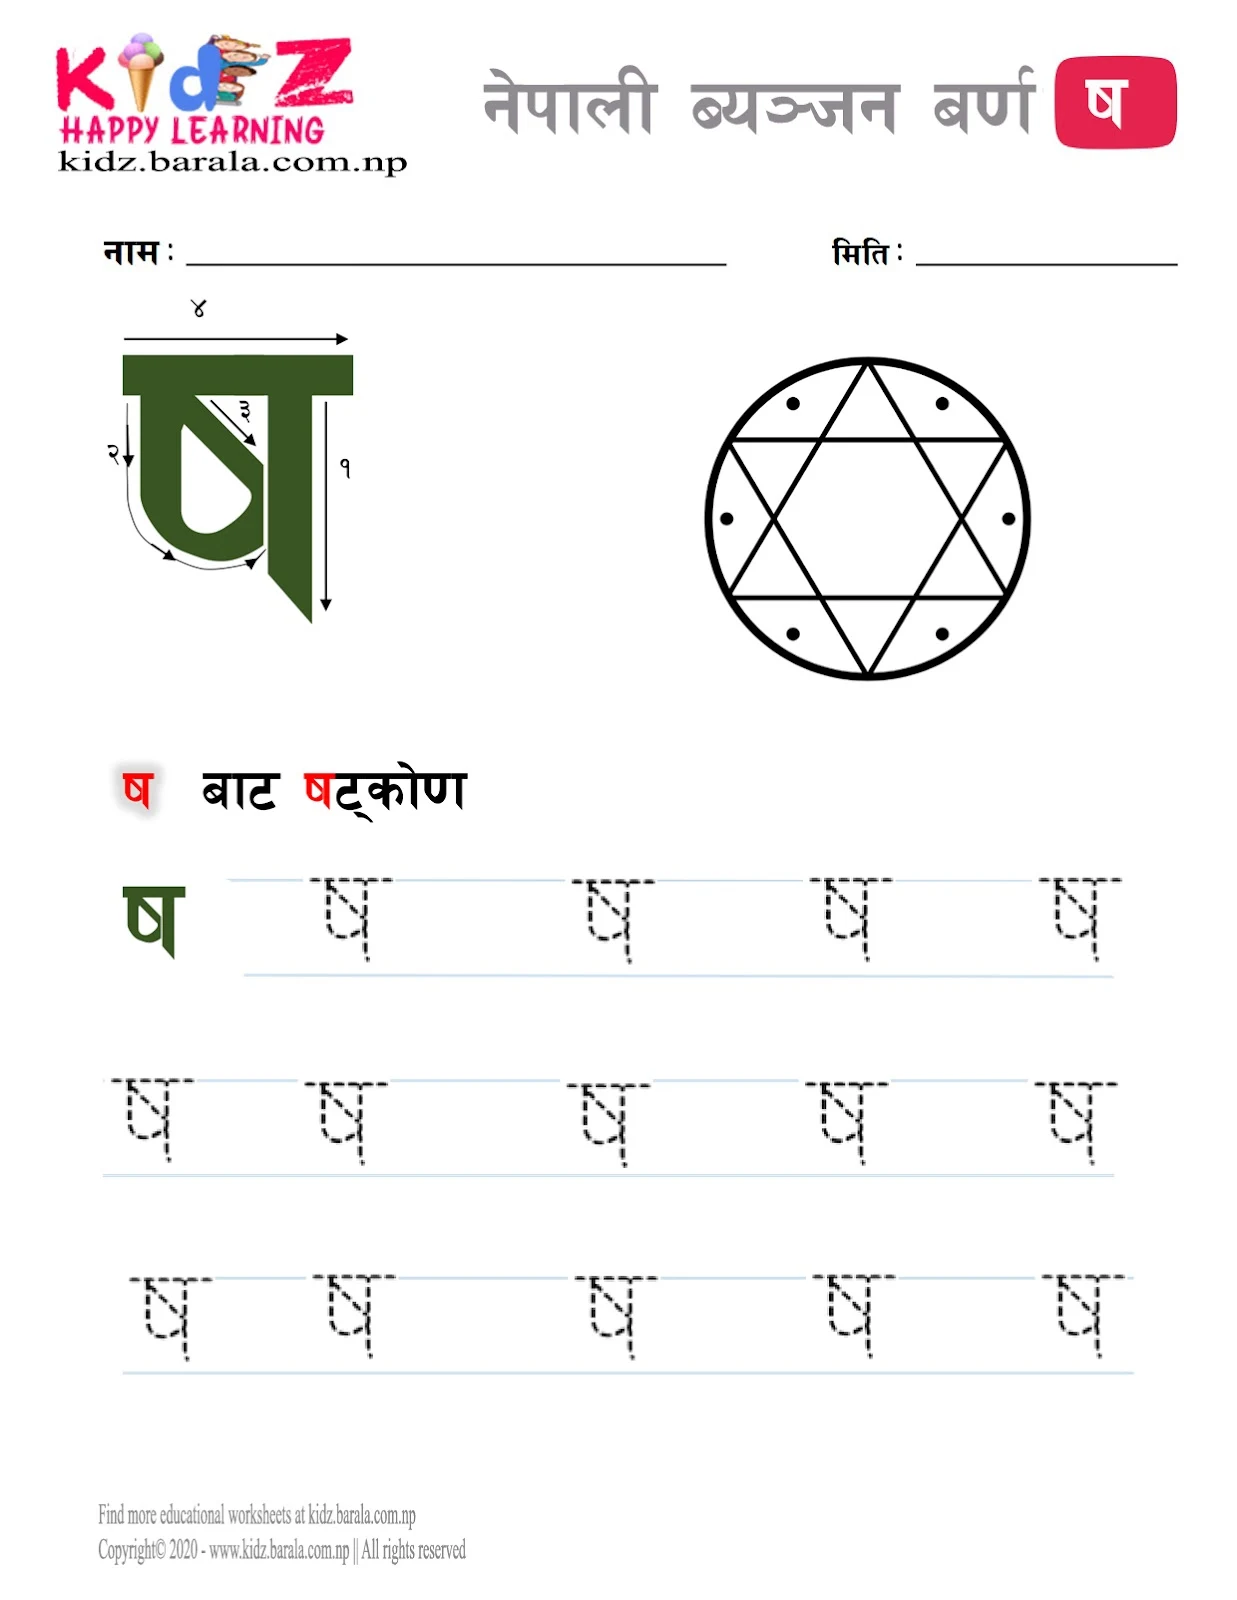 Nepali Consonant letter ष SHHA tracing worksheet free download .pdf